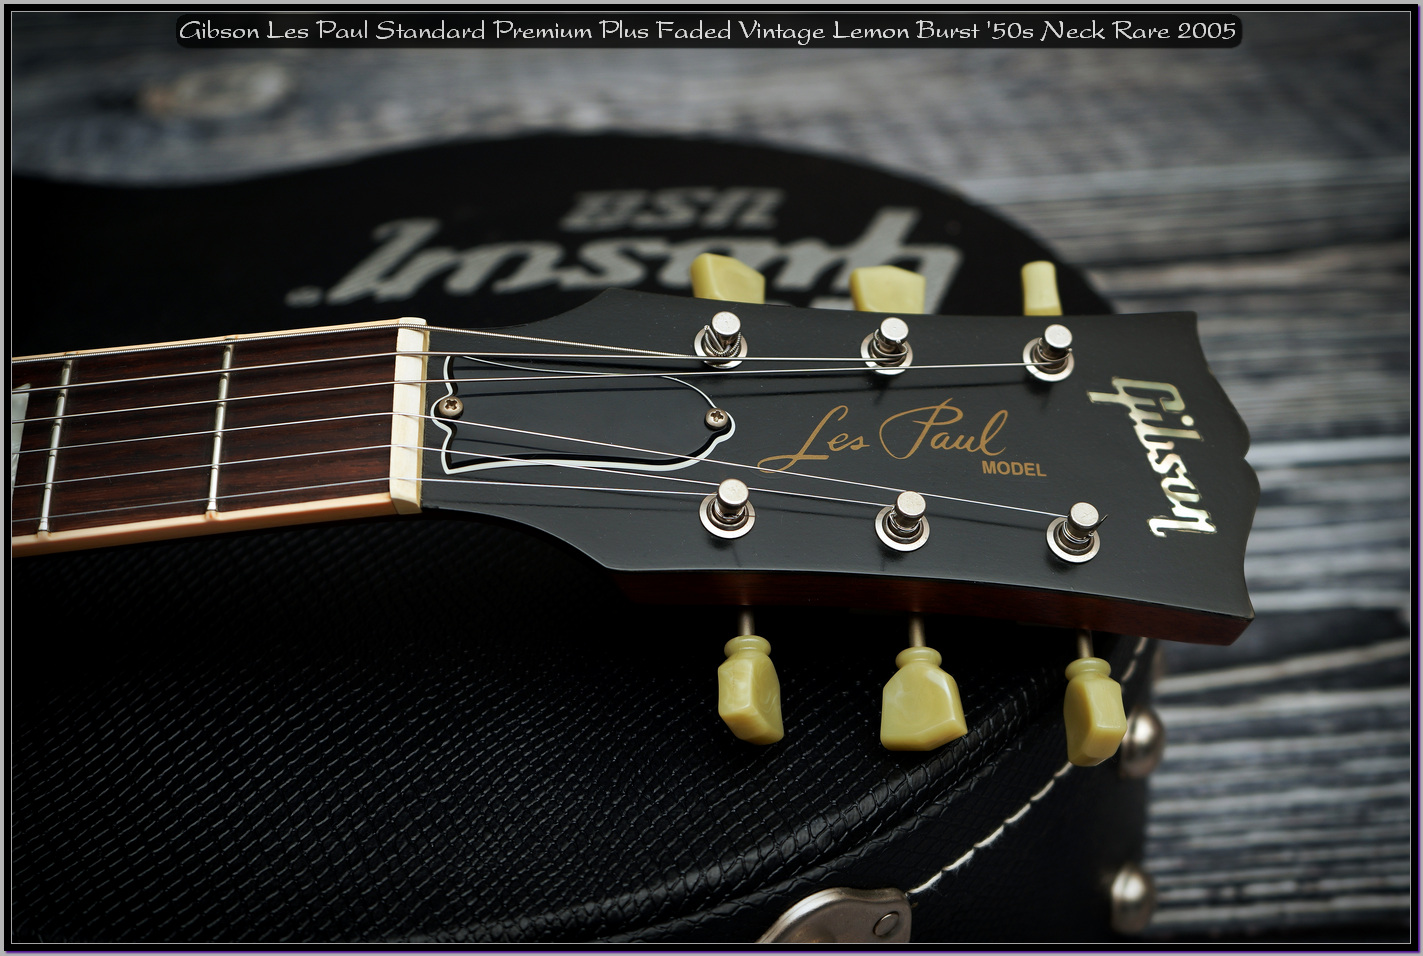 Gibson Les Paul Standard Premium Plus Faded Vintage Lemon Burst 